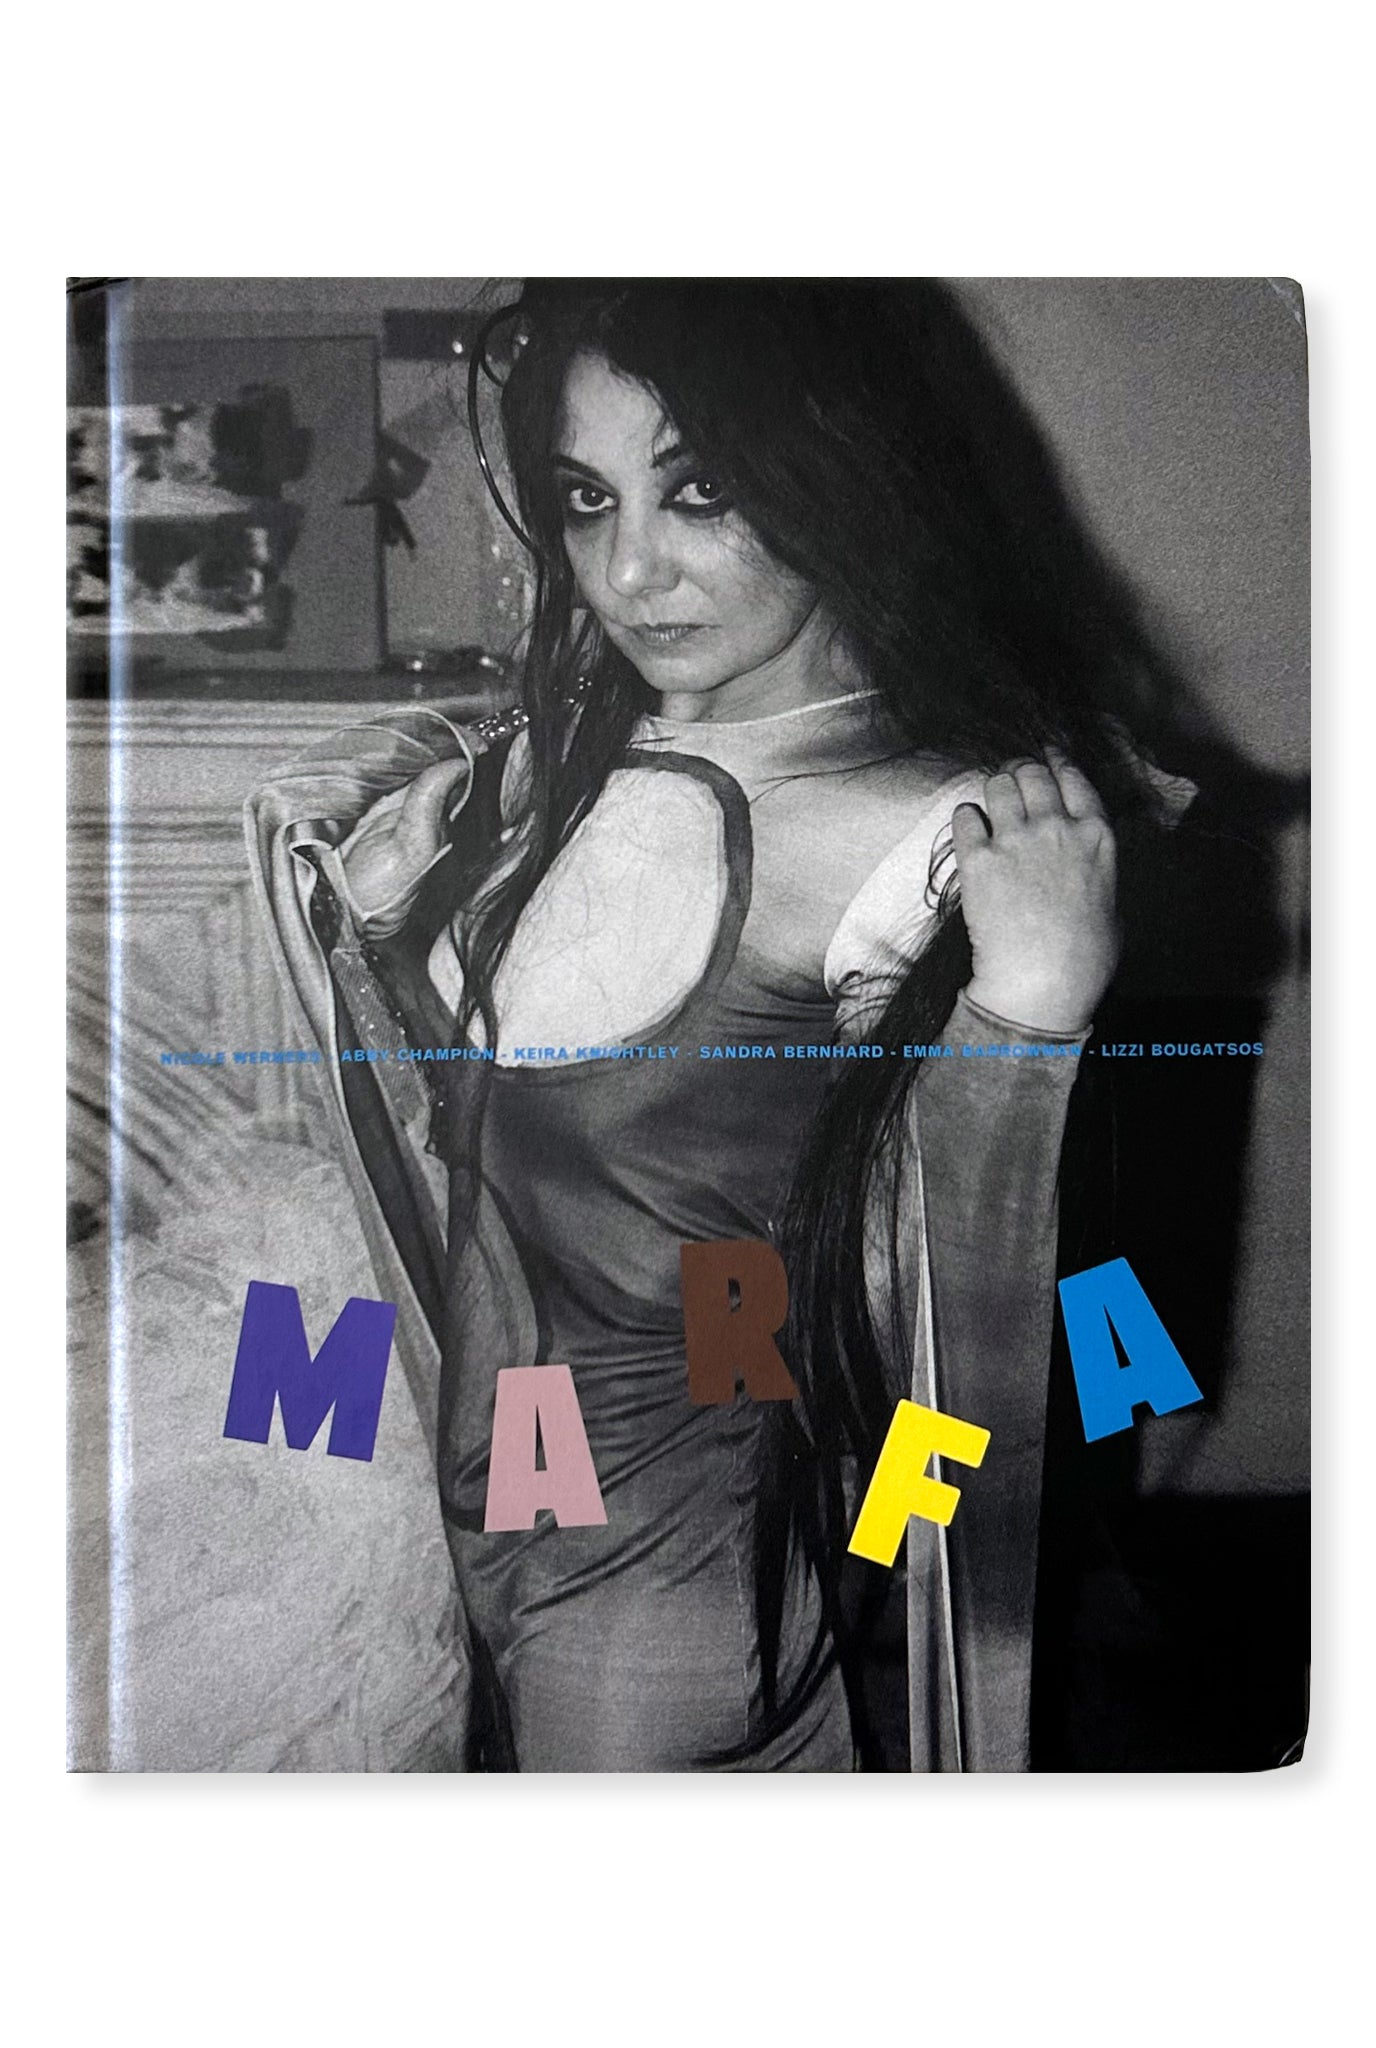 Marfa, Issue 19